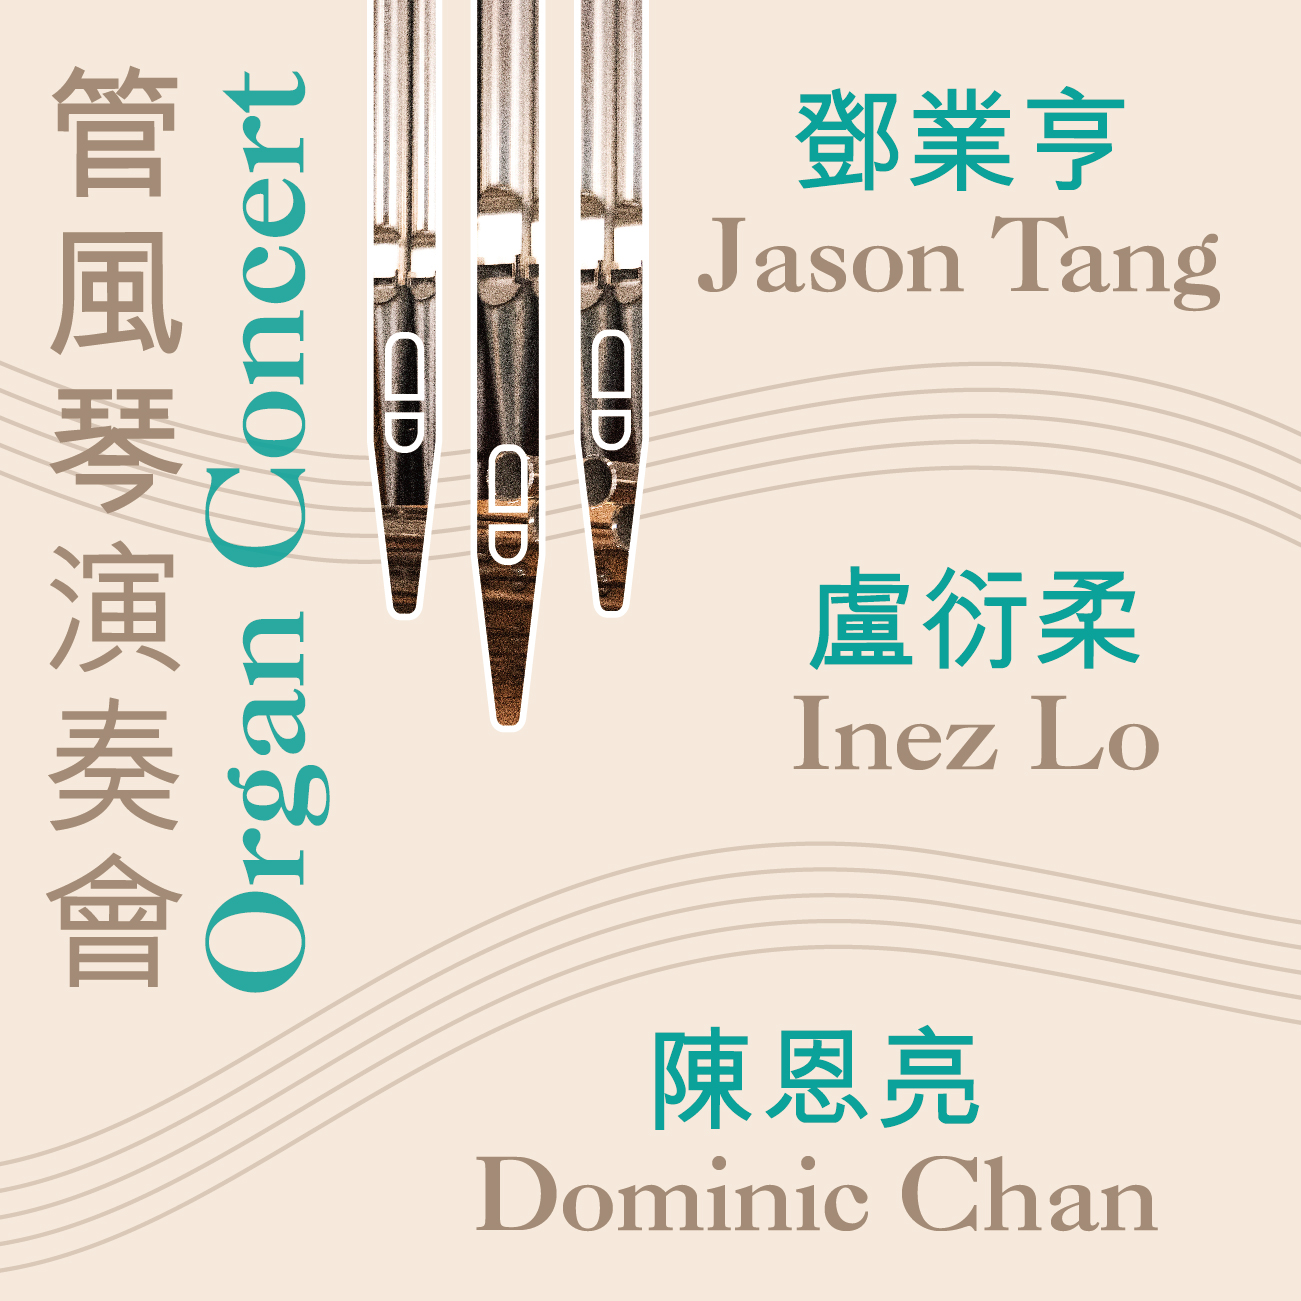 Organ Concert by Jason Tang, Inez Lo & Dominic Chan